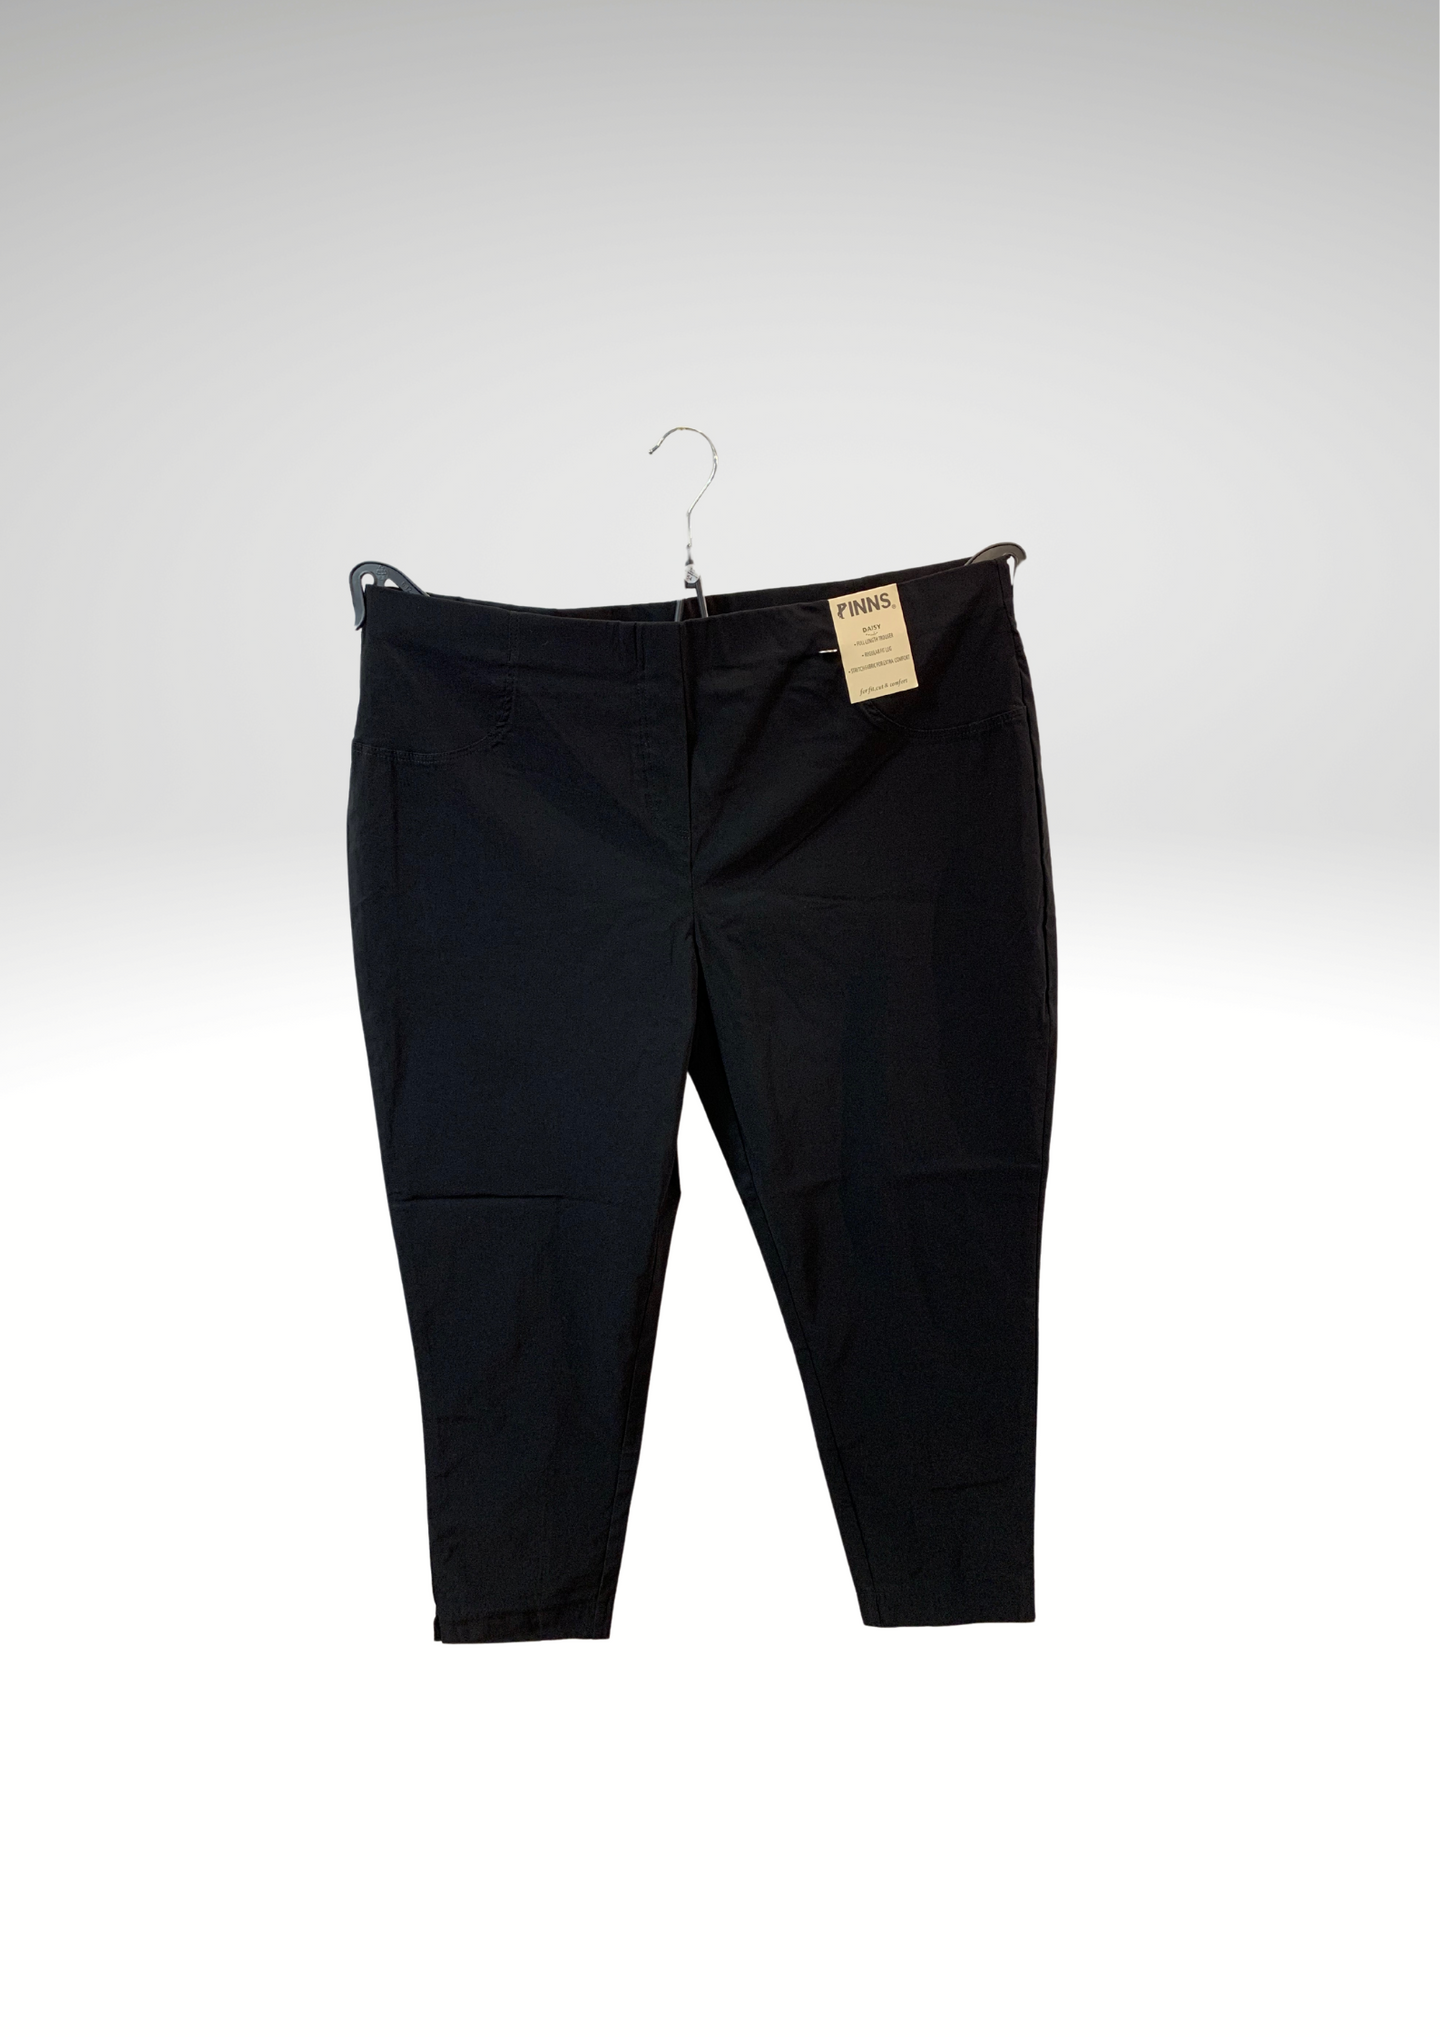 Pinns Full length Trousers - Black & Navy Available